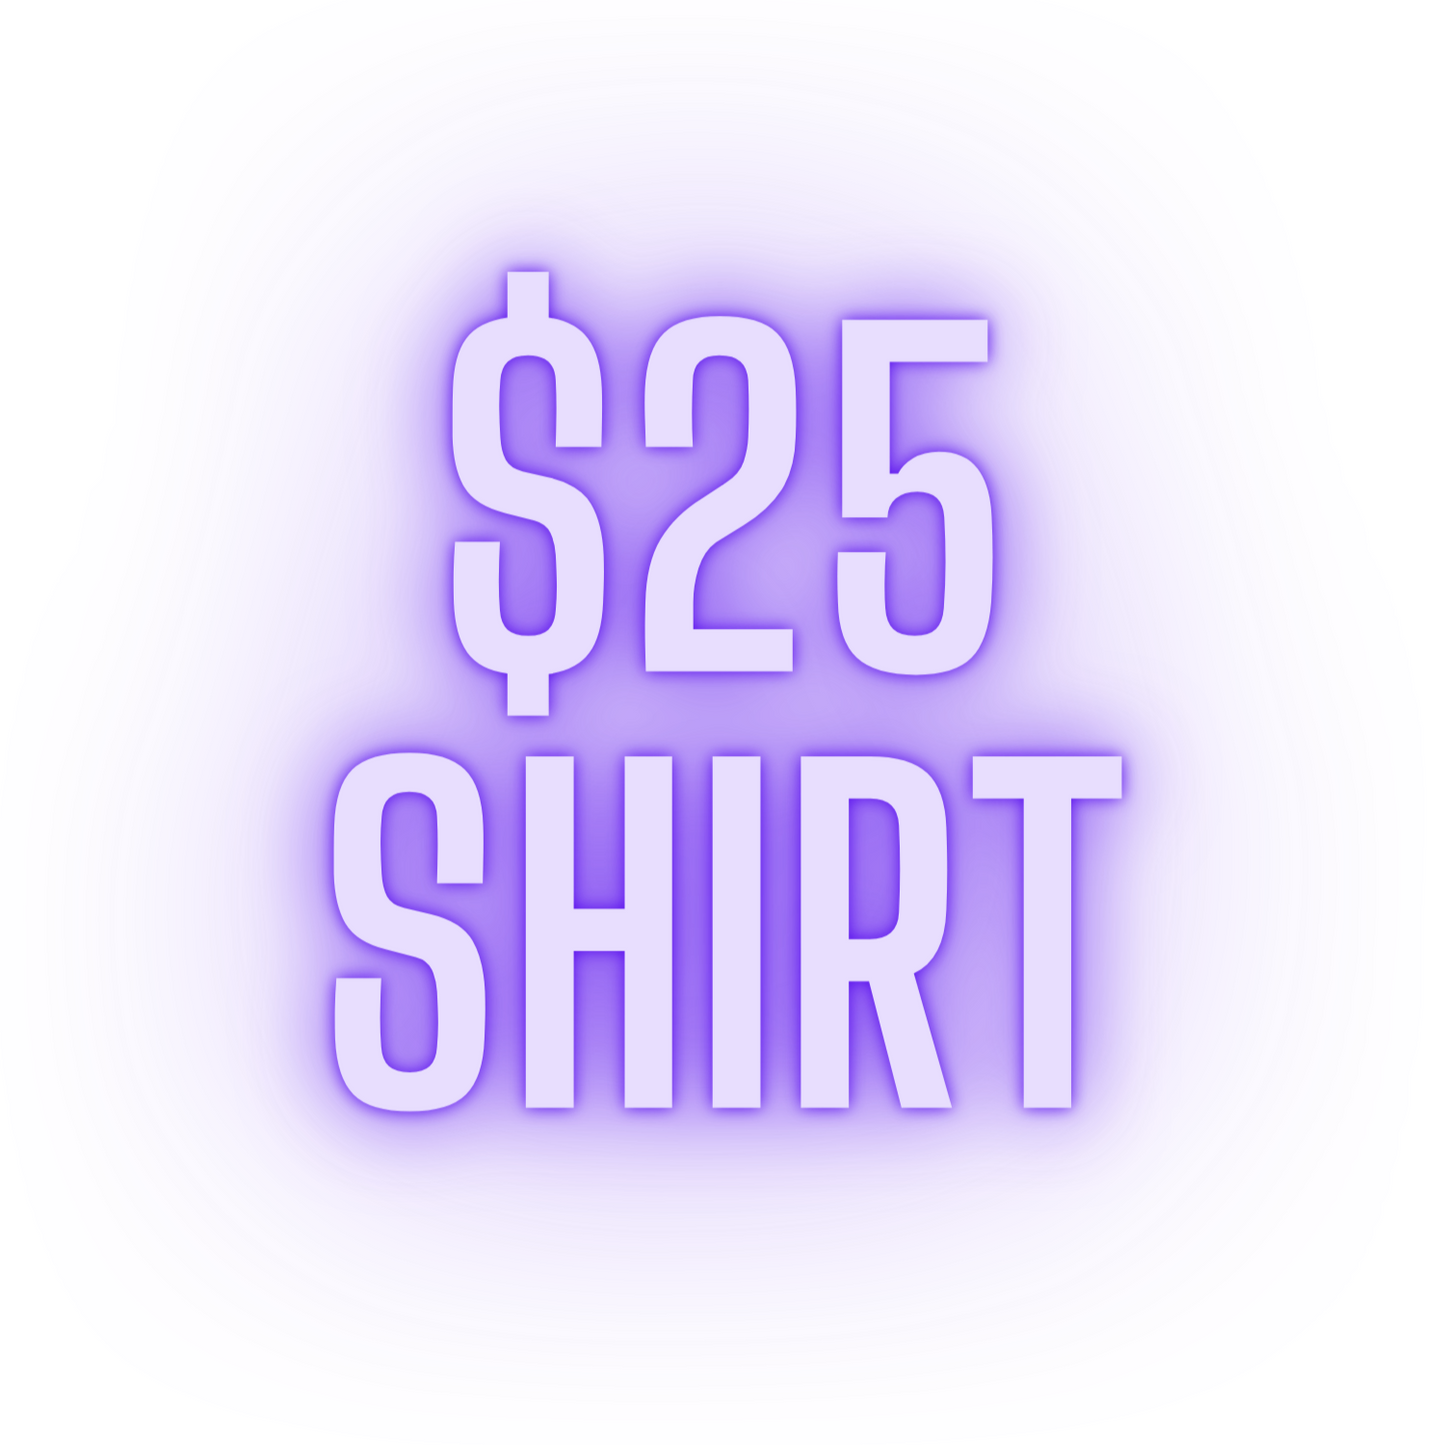 $25 Shirt